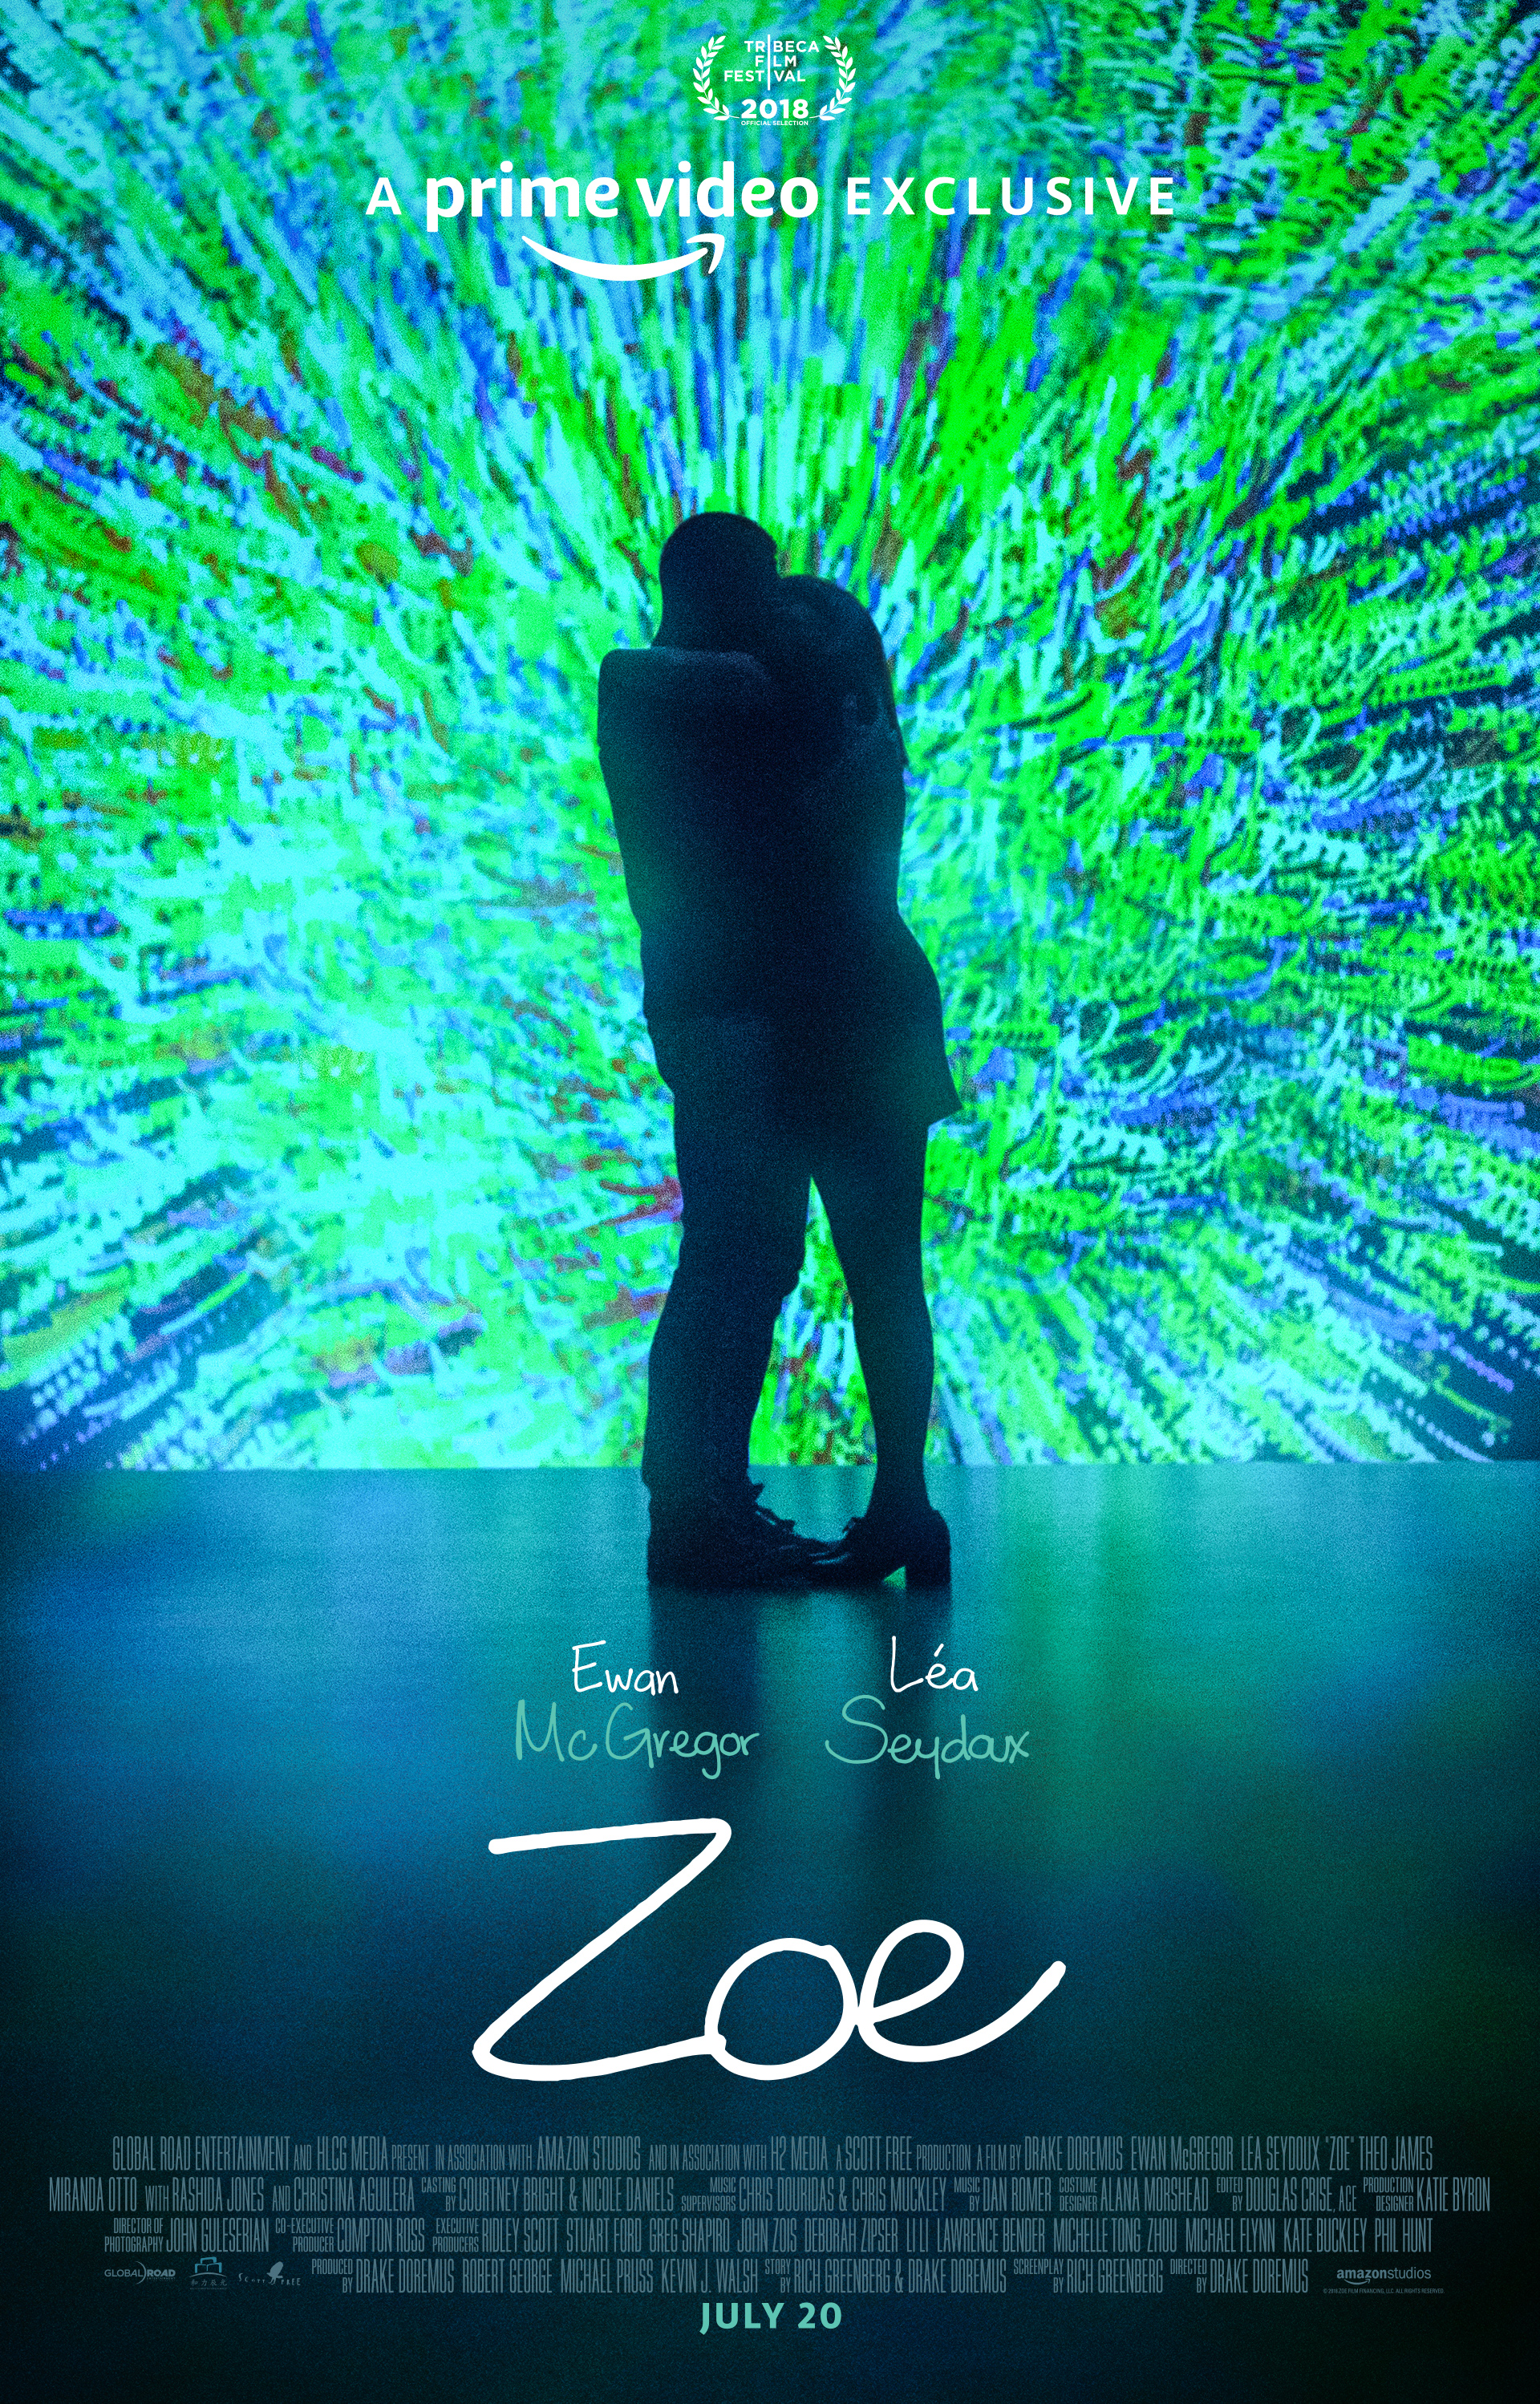 Zoe poster (Amazon Studios/Global Road Ent.)